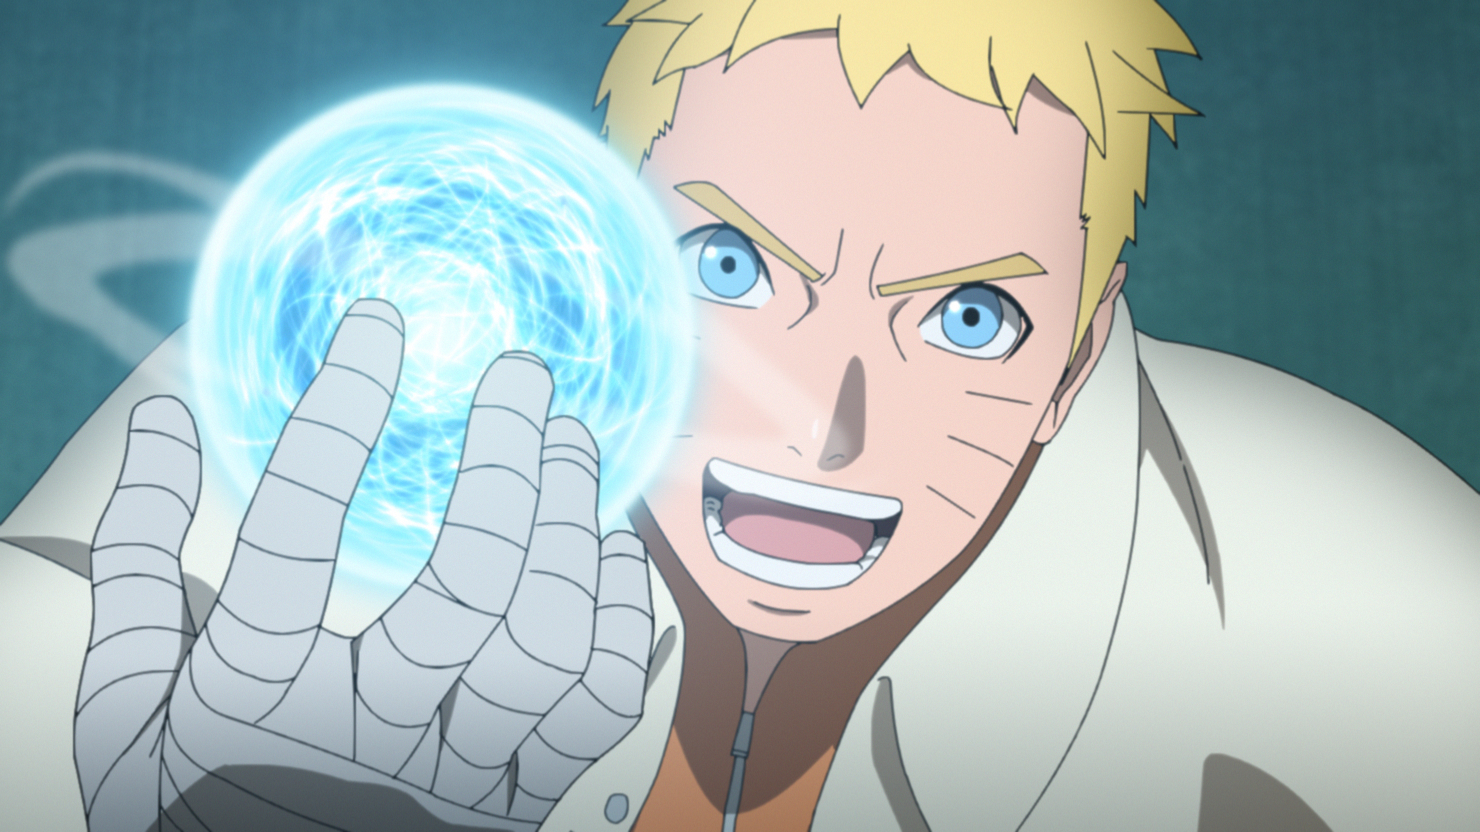 Crunchyroll - Naruto Celebrates 20 Years With Three New Anime Visuals  [UPDATED]